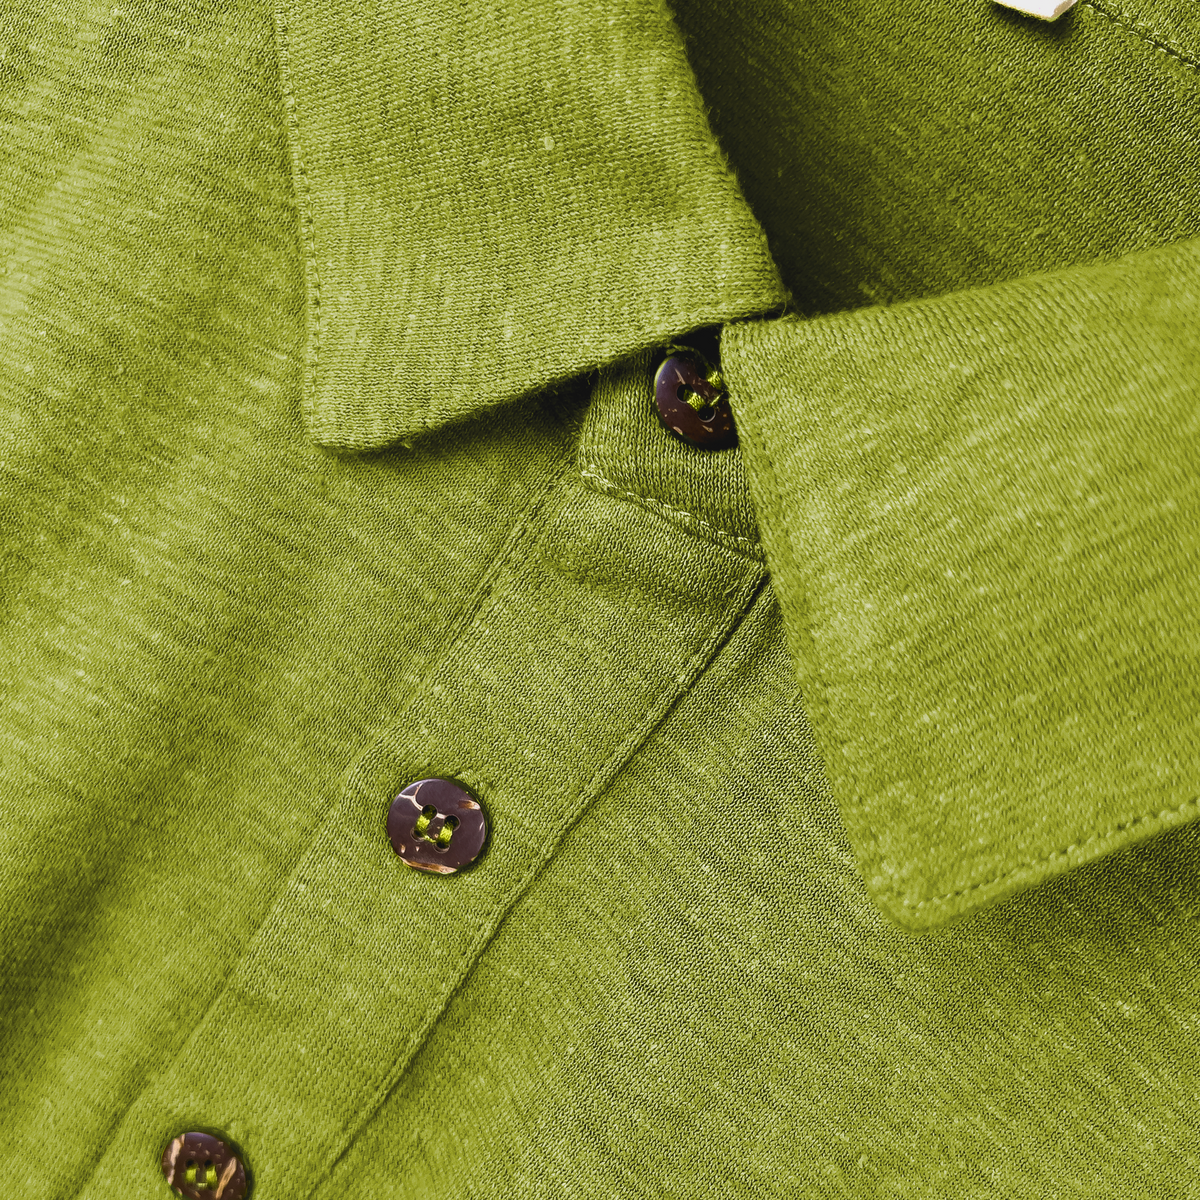 Polo Shirt, Hemp and Organic Cotton